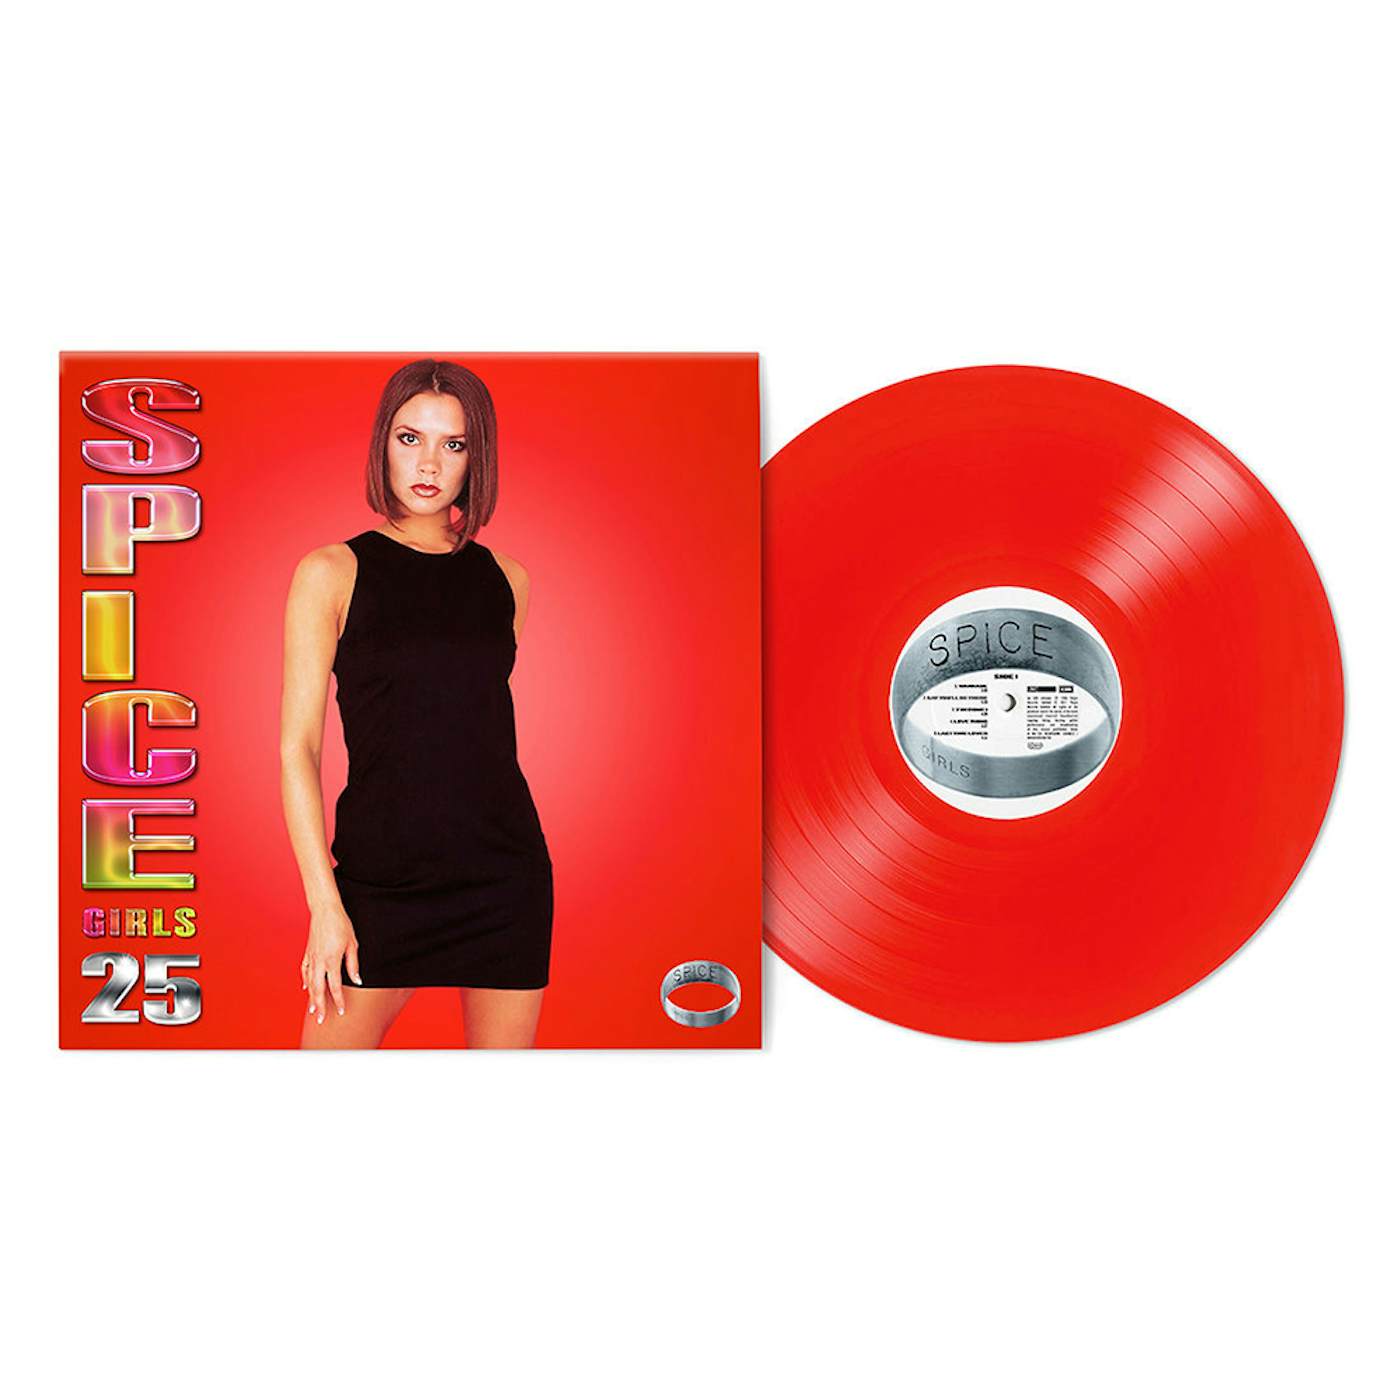 Spice Girls SPICE - 25TH ANNIVERSARY (‘POSH’ RED COLORED LP) (Vinyl)